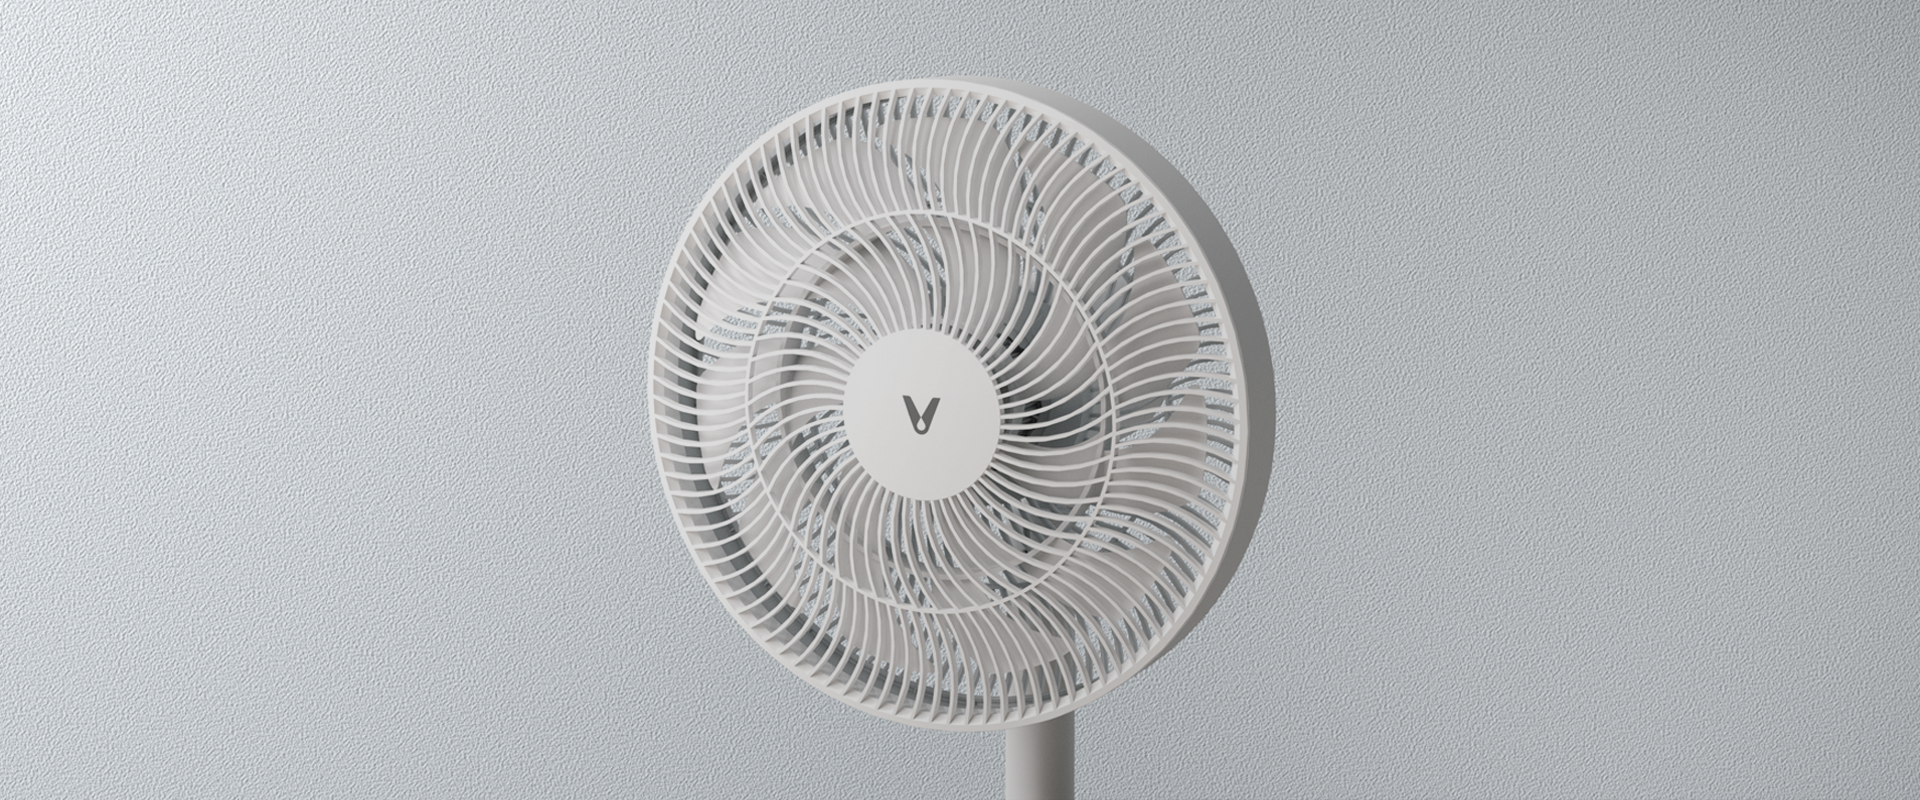 Viomi floor standing fan with natural wind